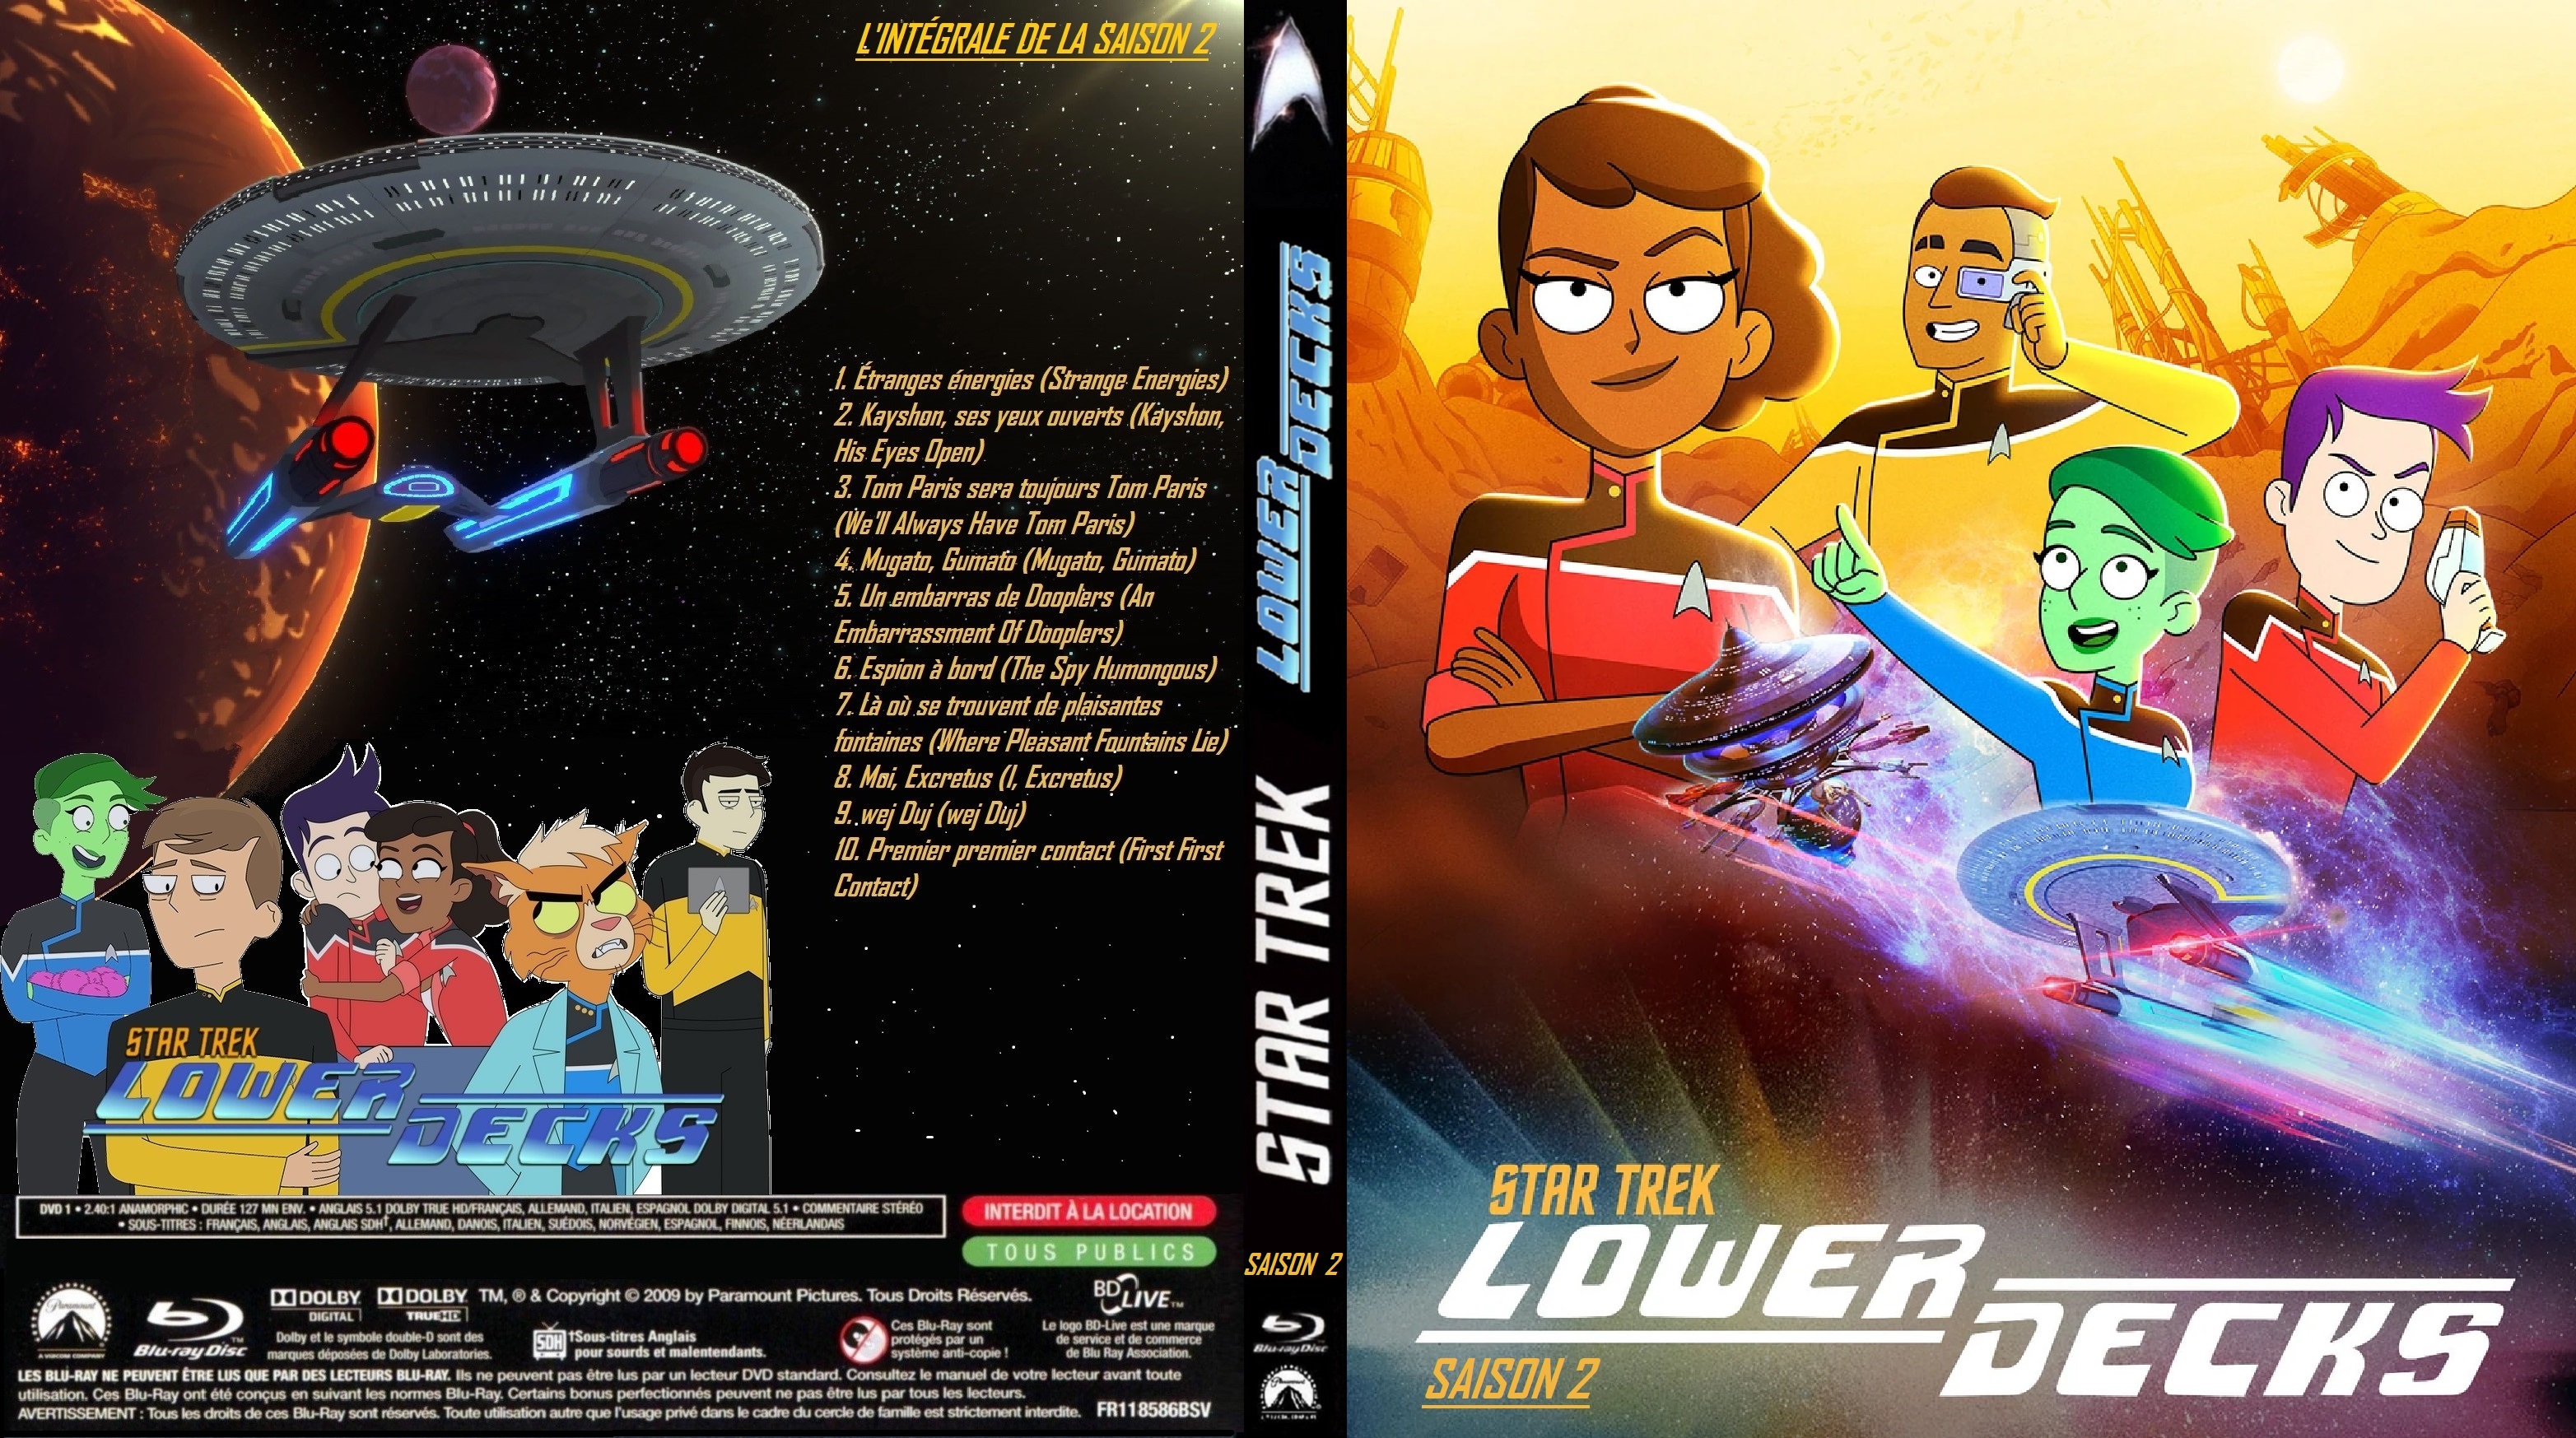 Jaquette DVD Star Trek Lower Decks saison 2 Blu ray custom